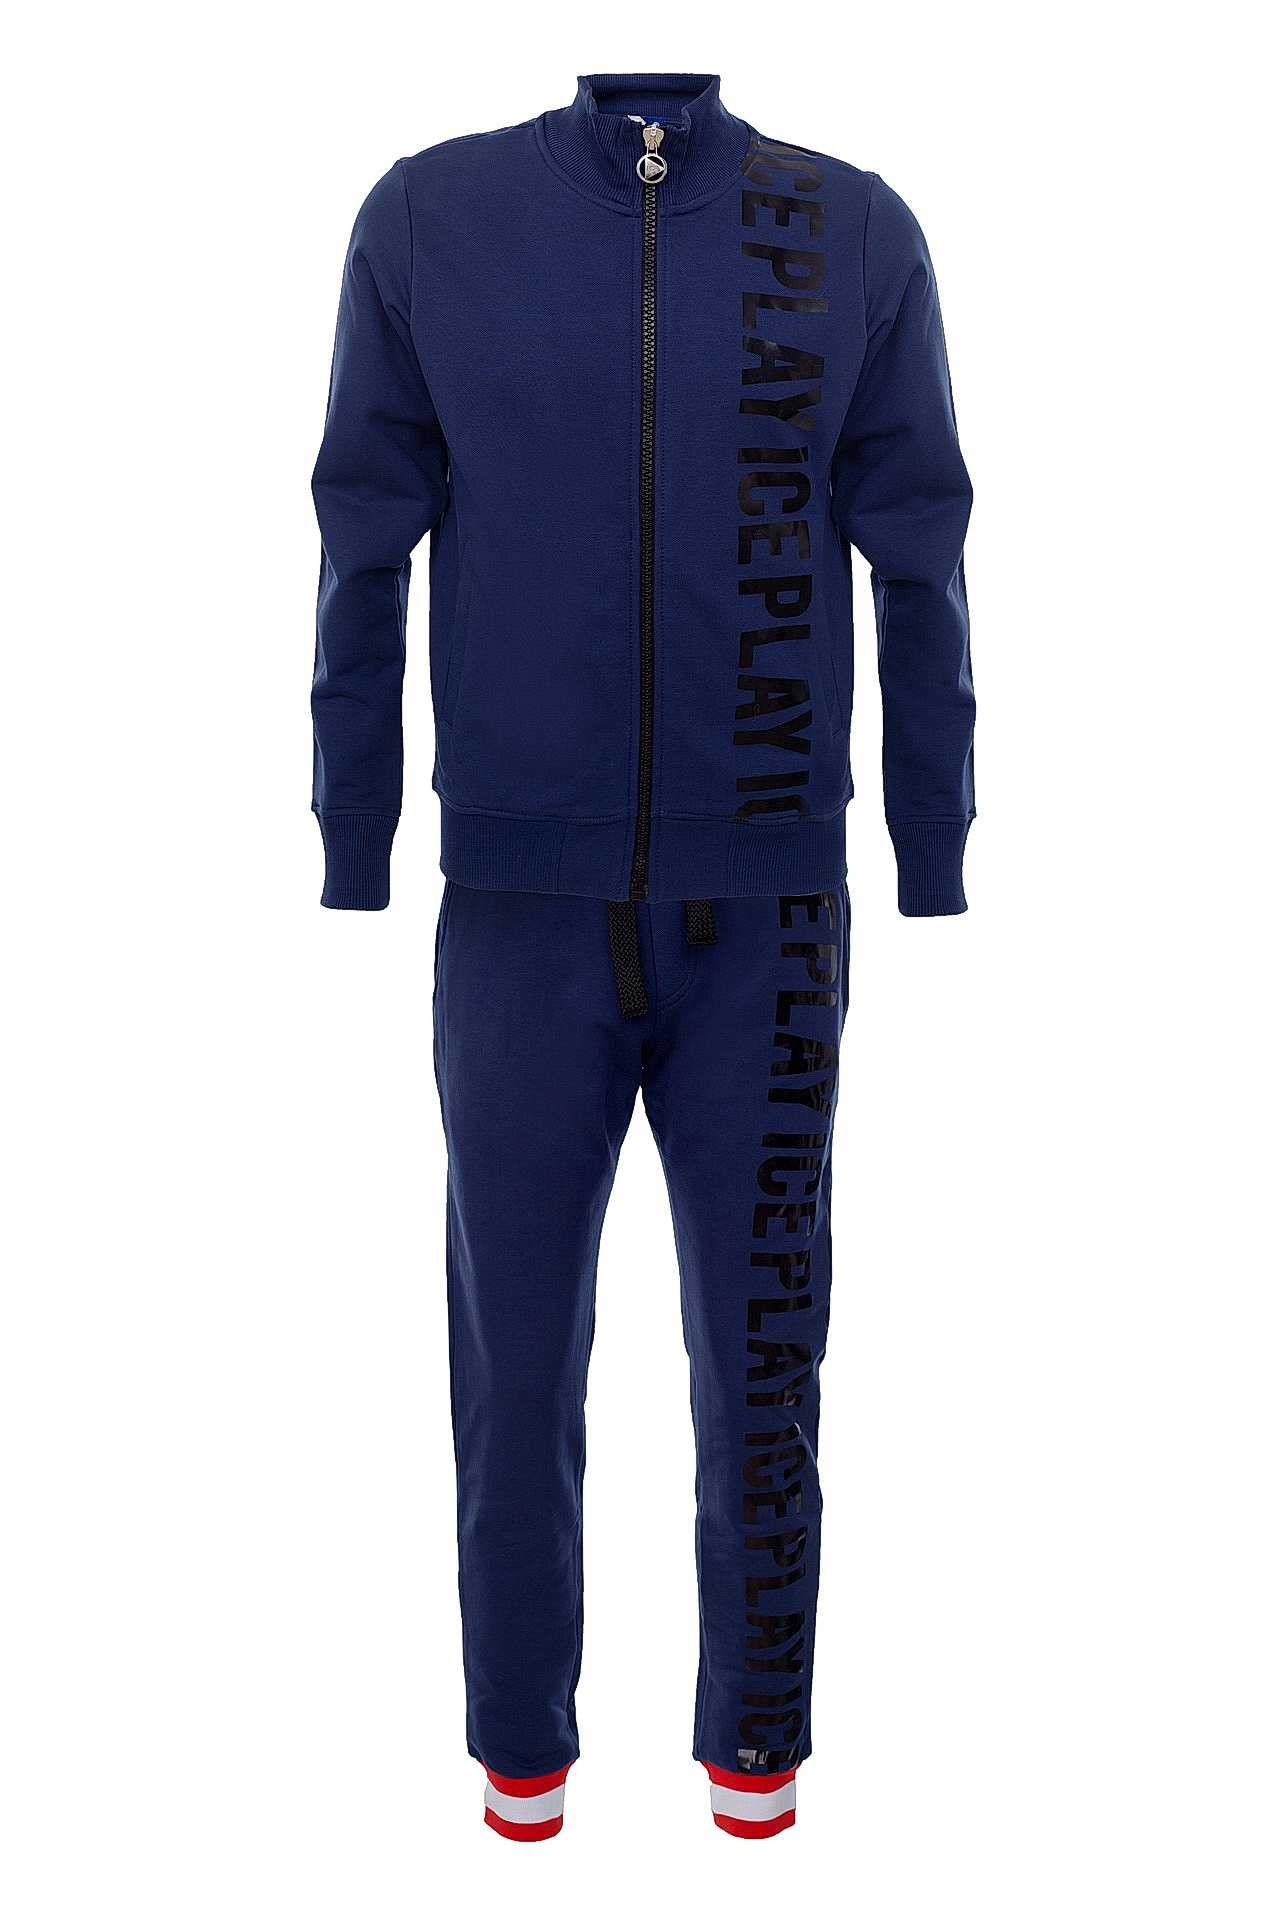 Одежда мужская Костюм ICEBERG (E111B021P402/18.1). Купить за 12375 руб.